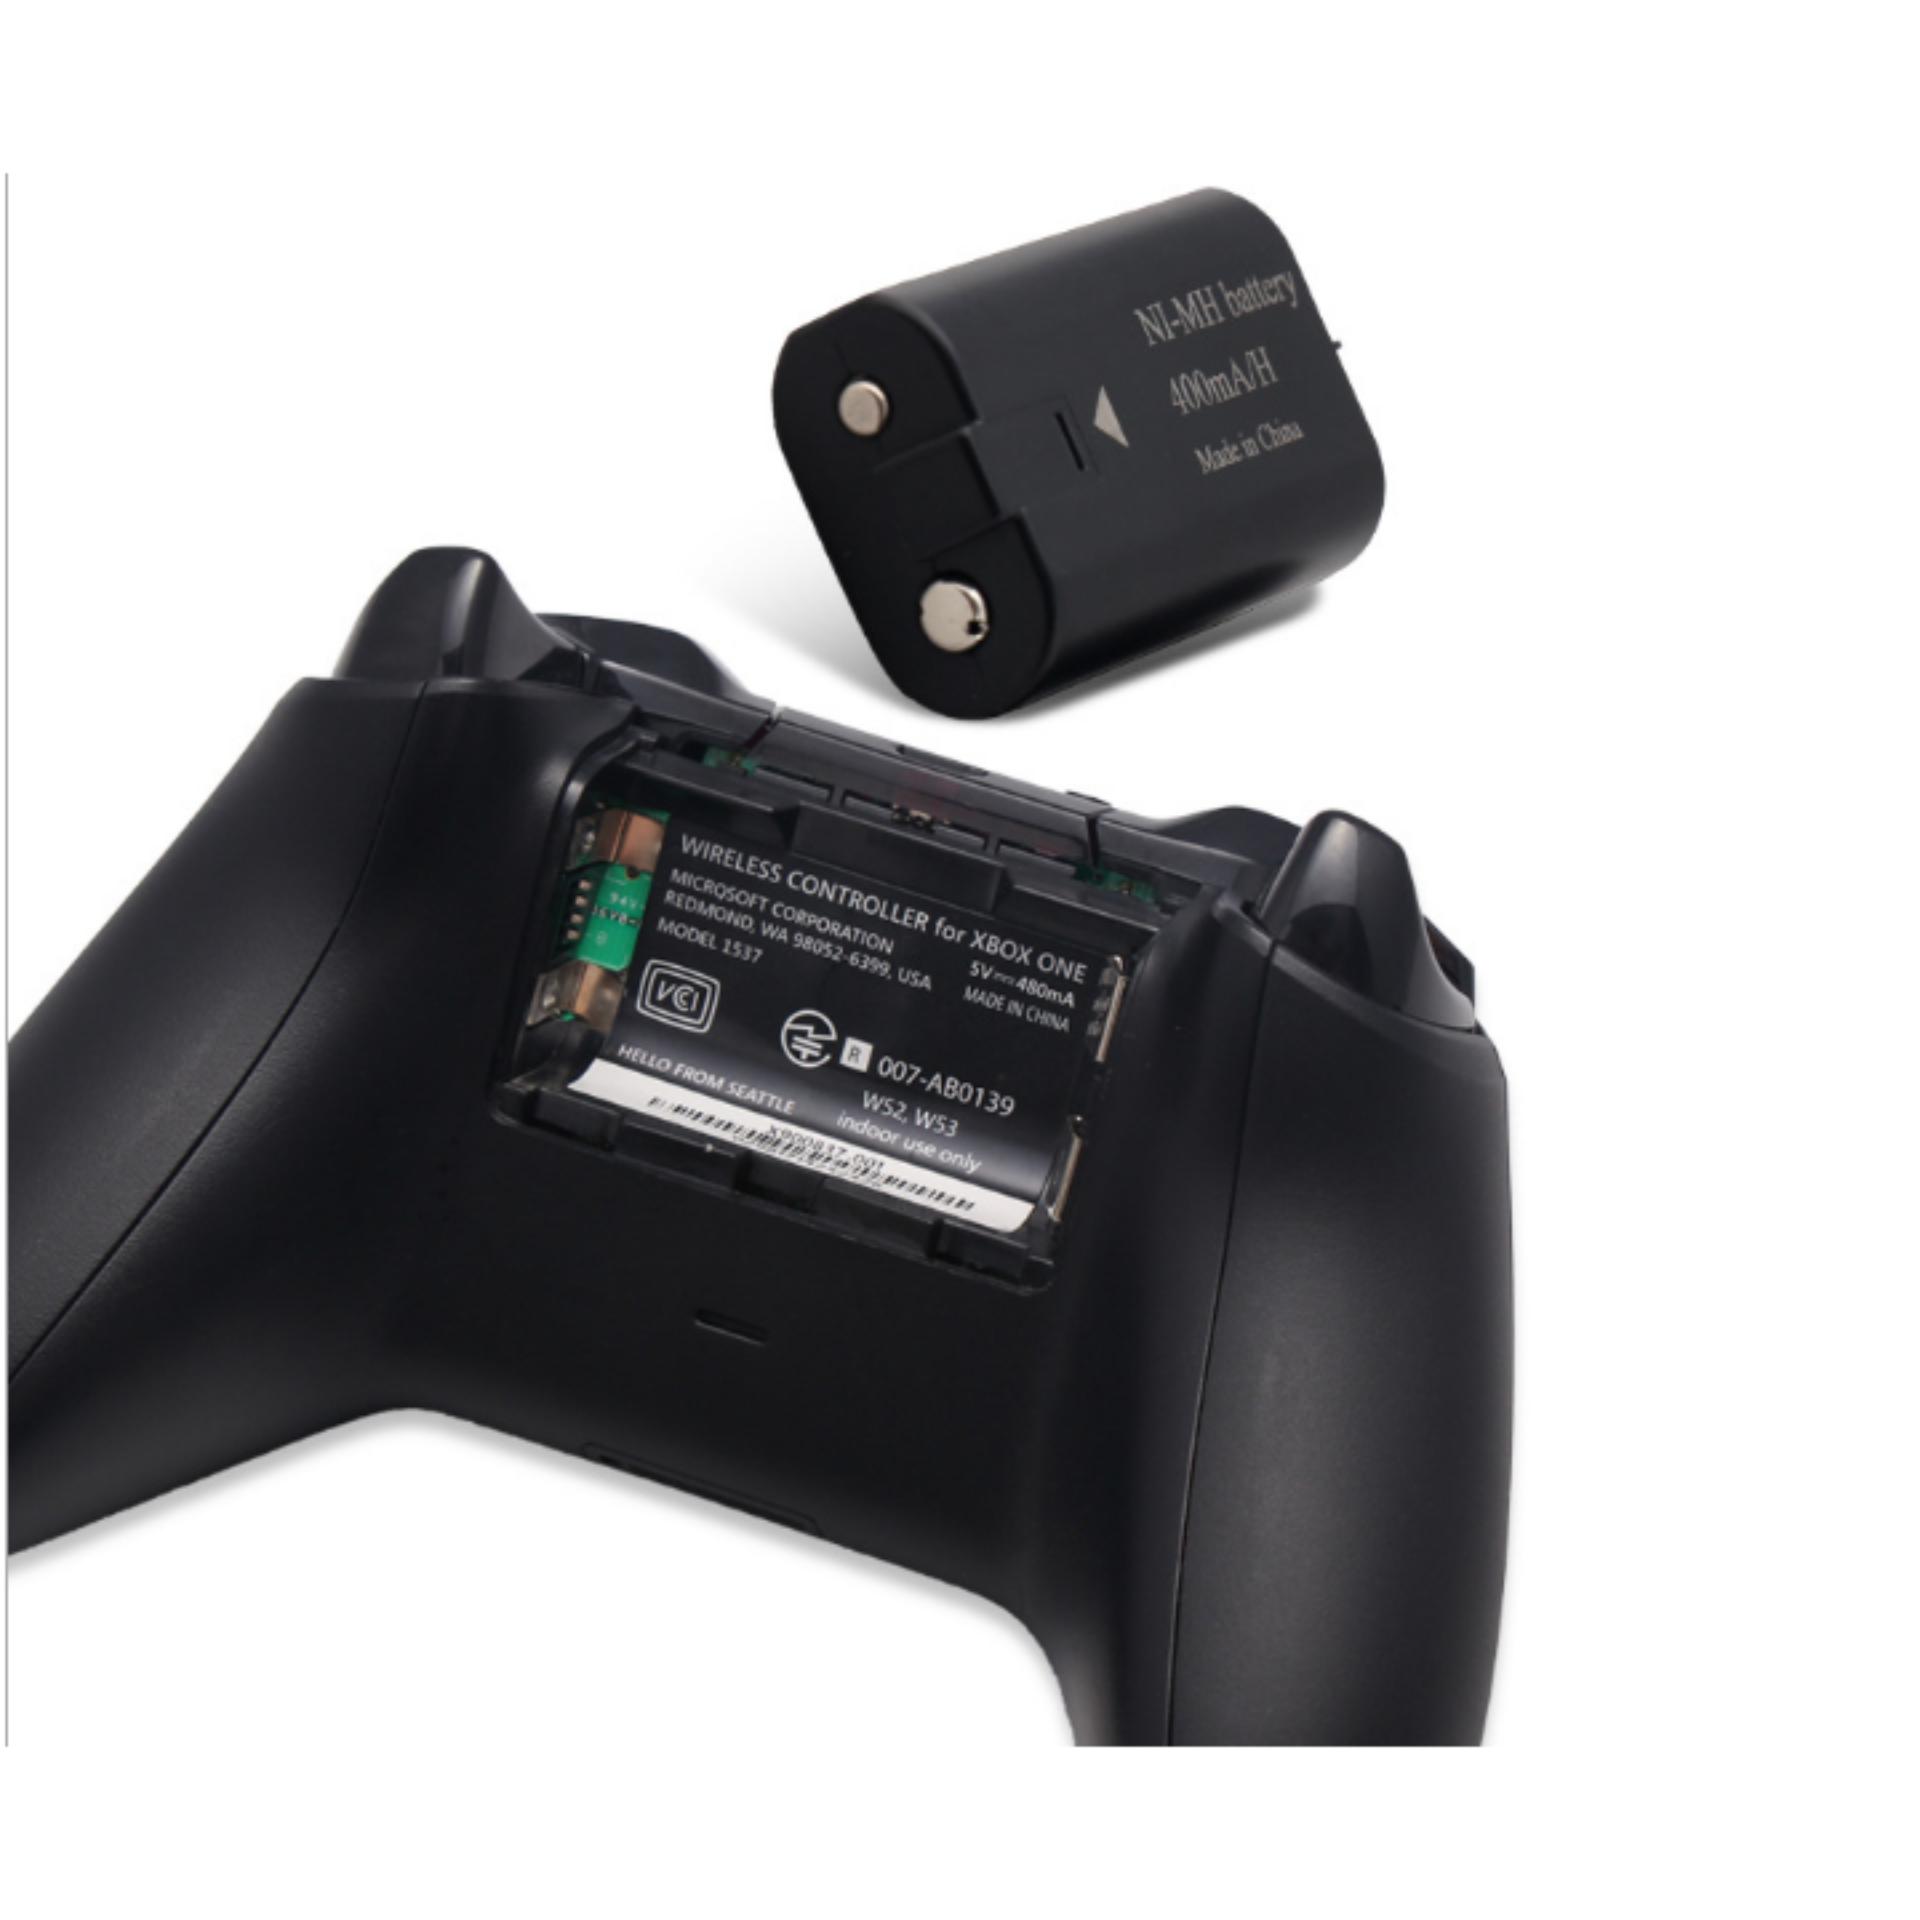 Battery controller. Аккумулятор для контроллера Xbox one. Батарейки для джойстика Xbox one s. Xbox Wireless Controller аккумулятор. Аккумулятор для геймпада Xbox 360.